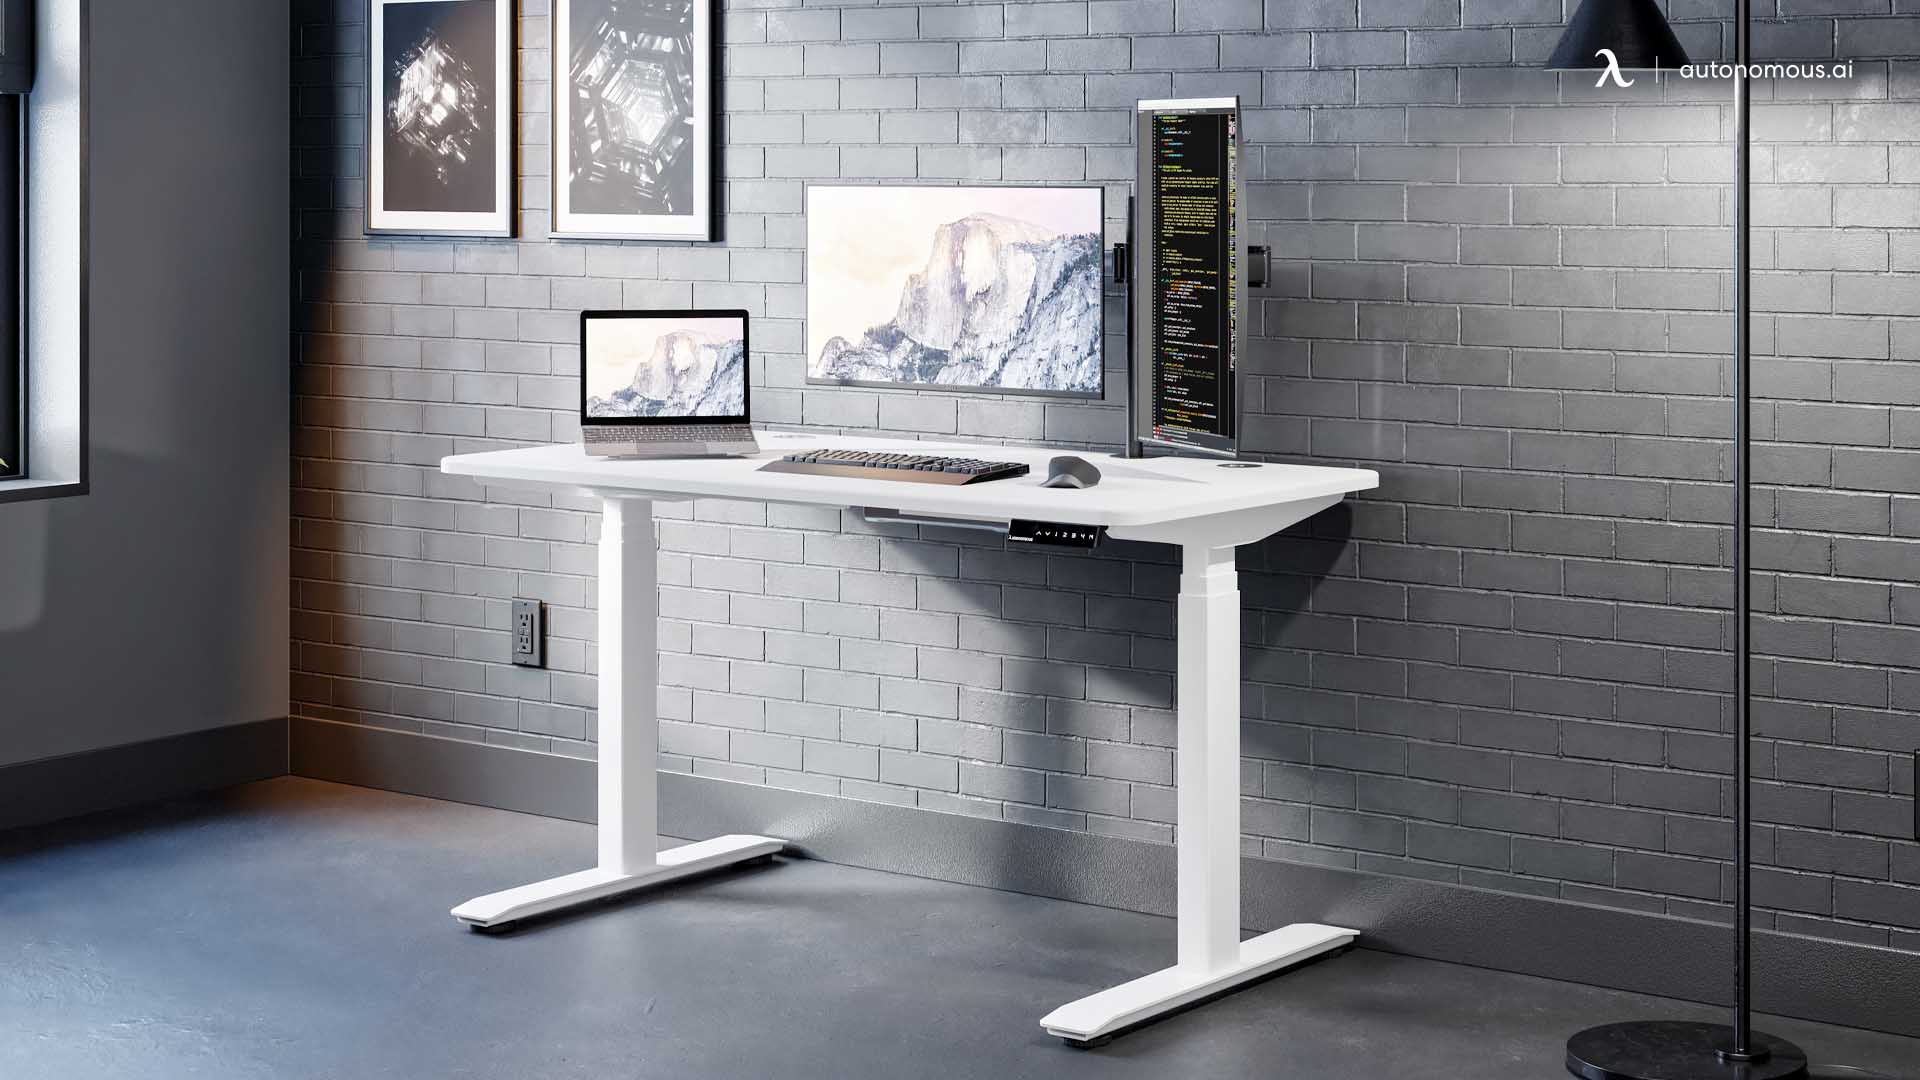 Smartdesk Pro light wood desk